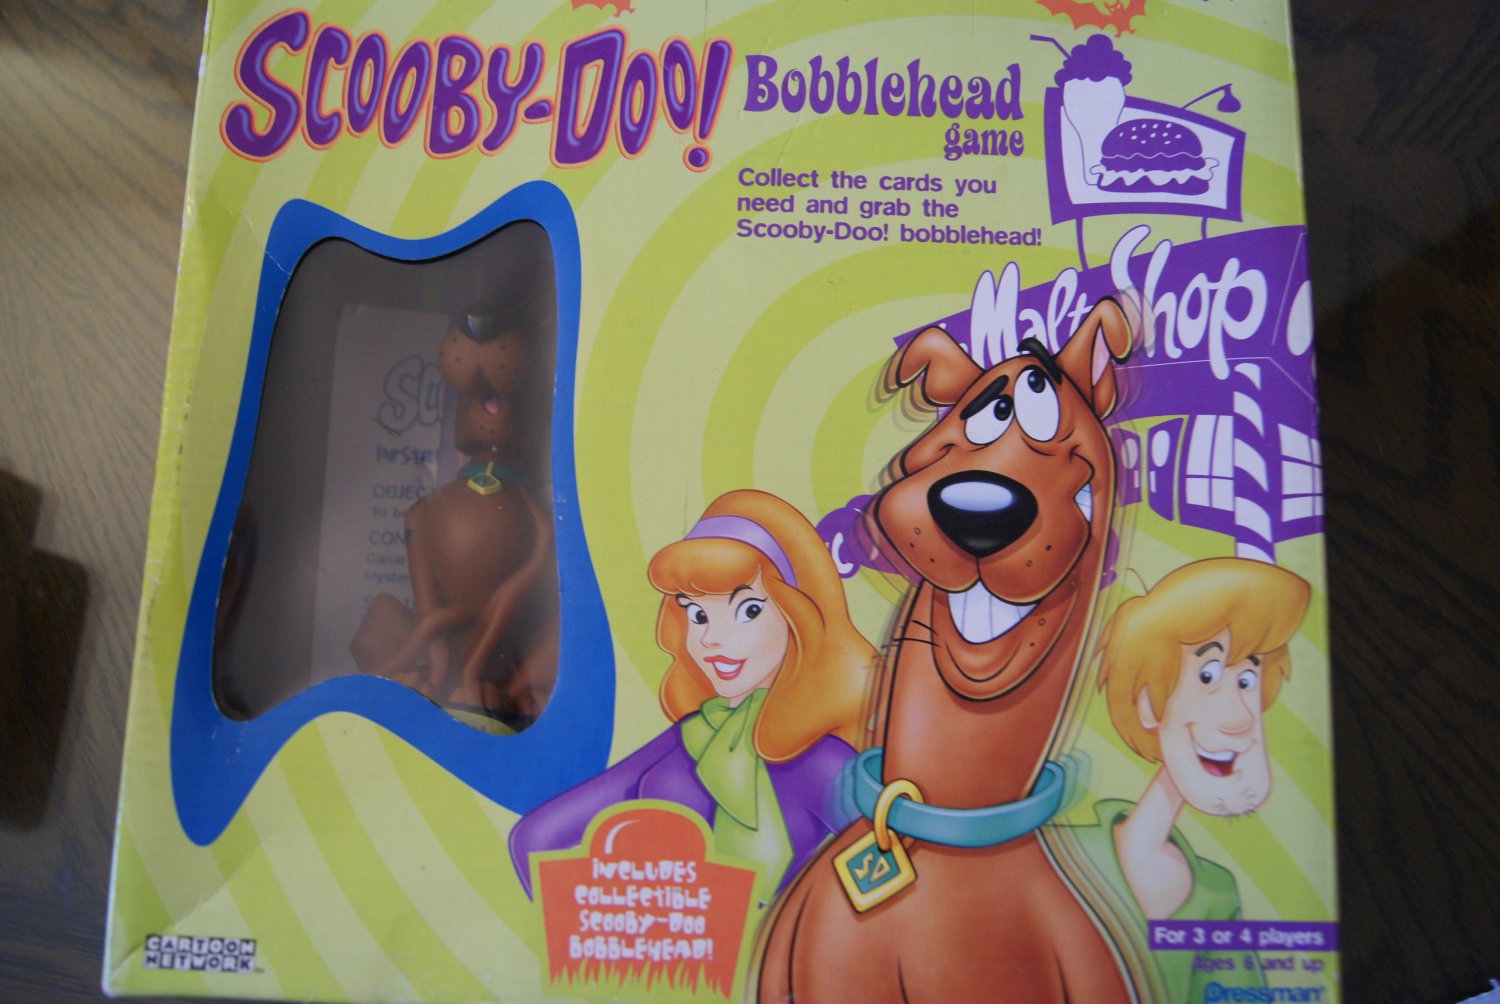 Scooby-Doo Bobblehead game